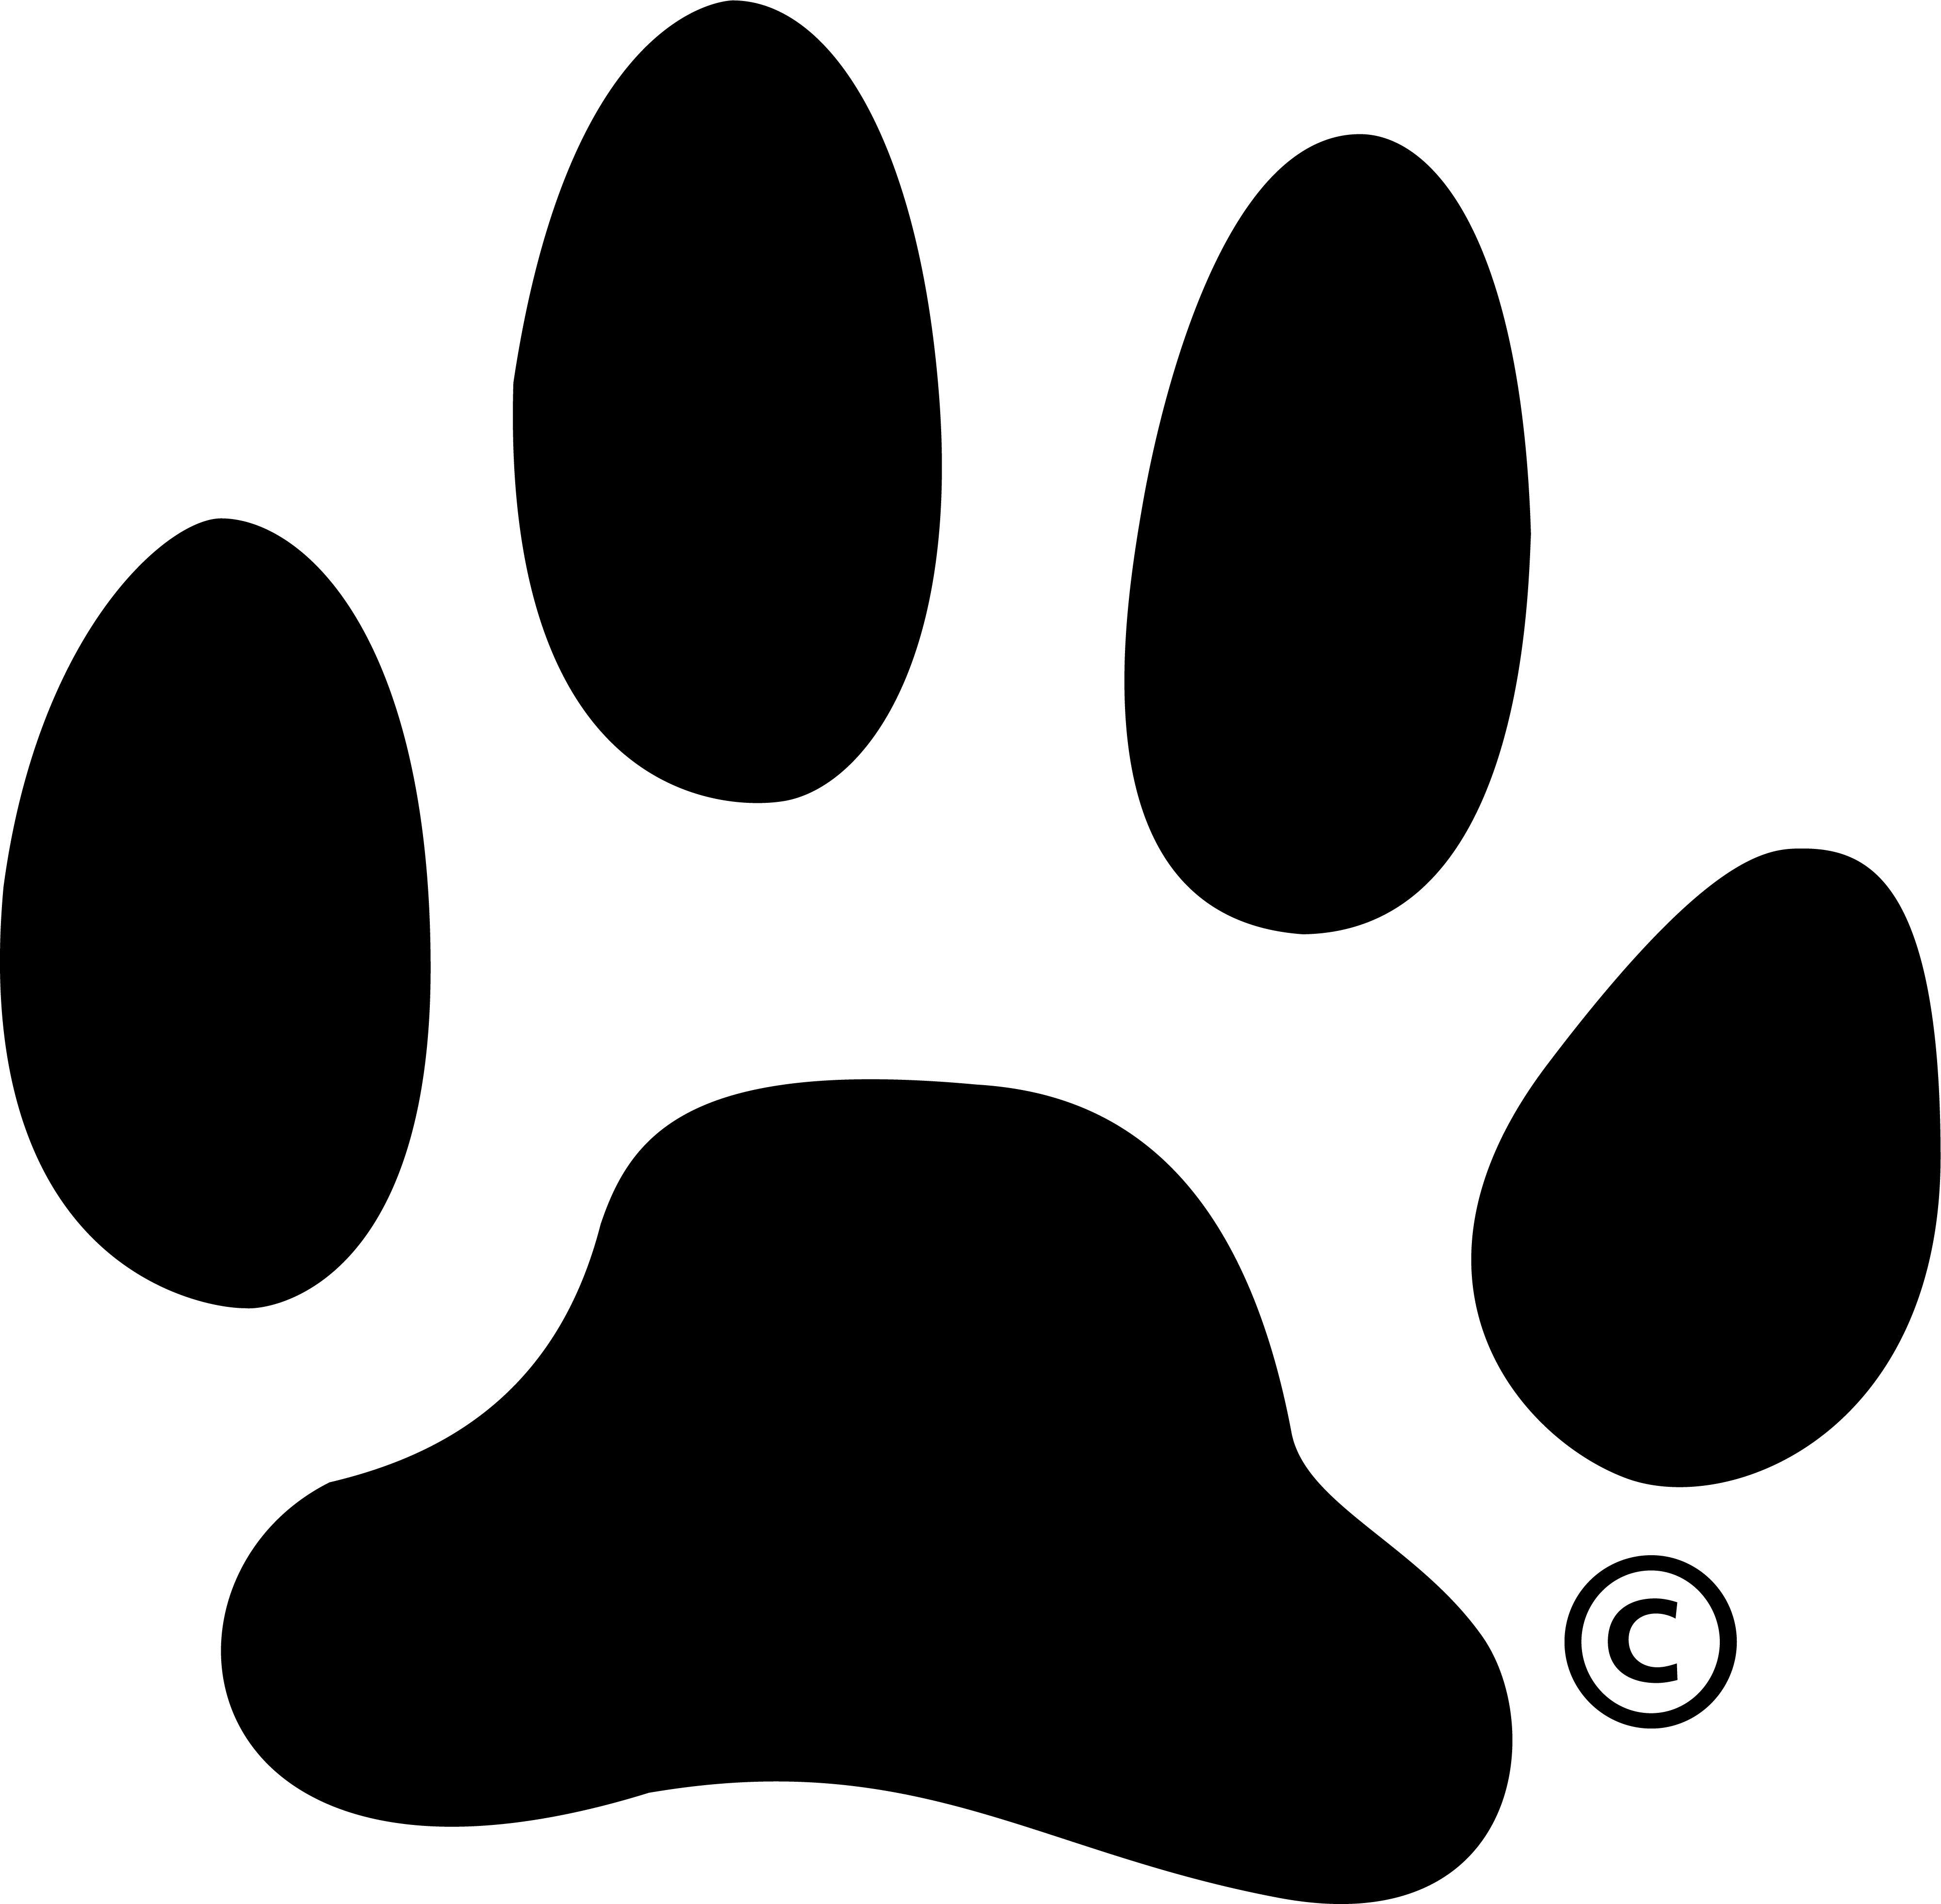 Black Paw Print Logo - Our Logos | Barton Community College